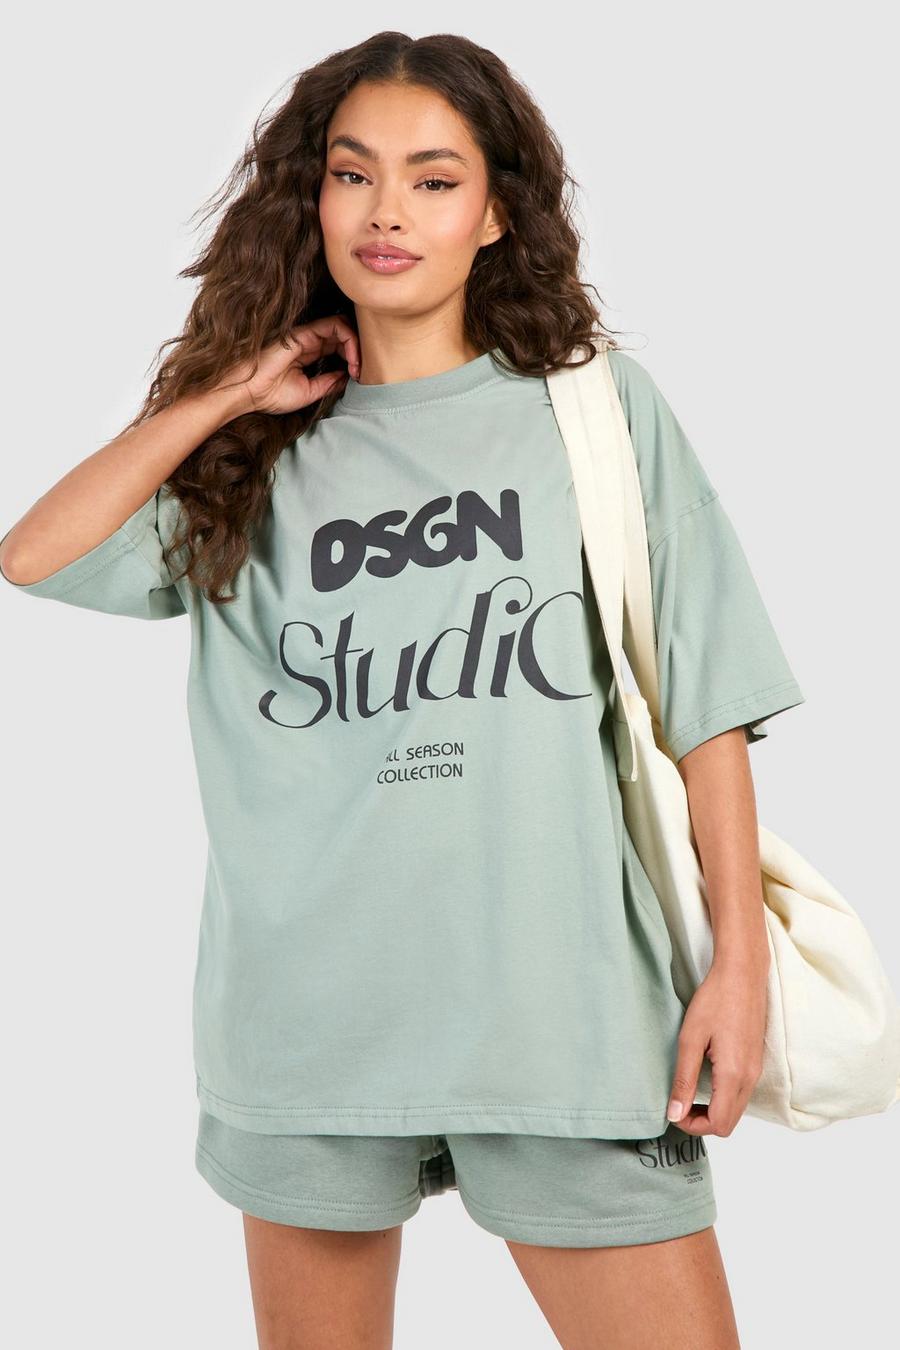 Ensemble oversize à slogan Dsgn Studio, Washed khaki image number 1